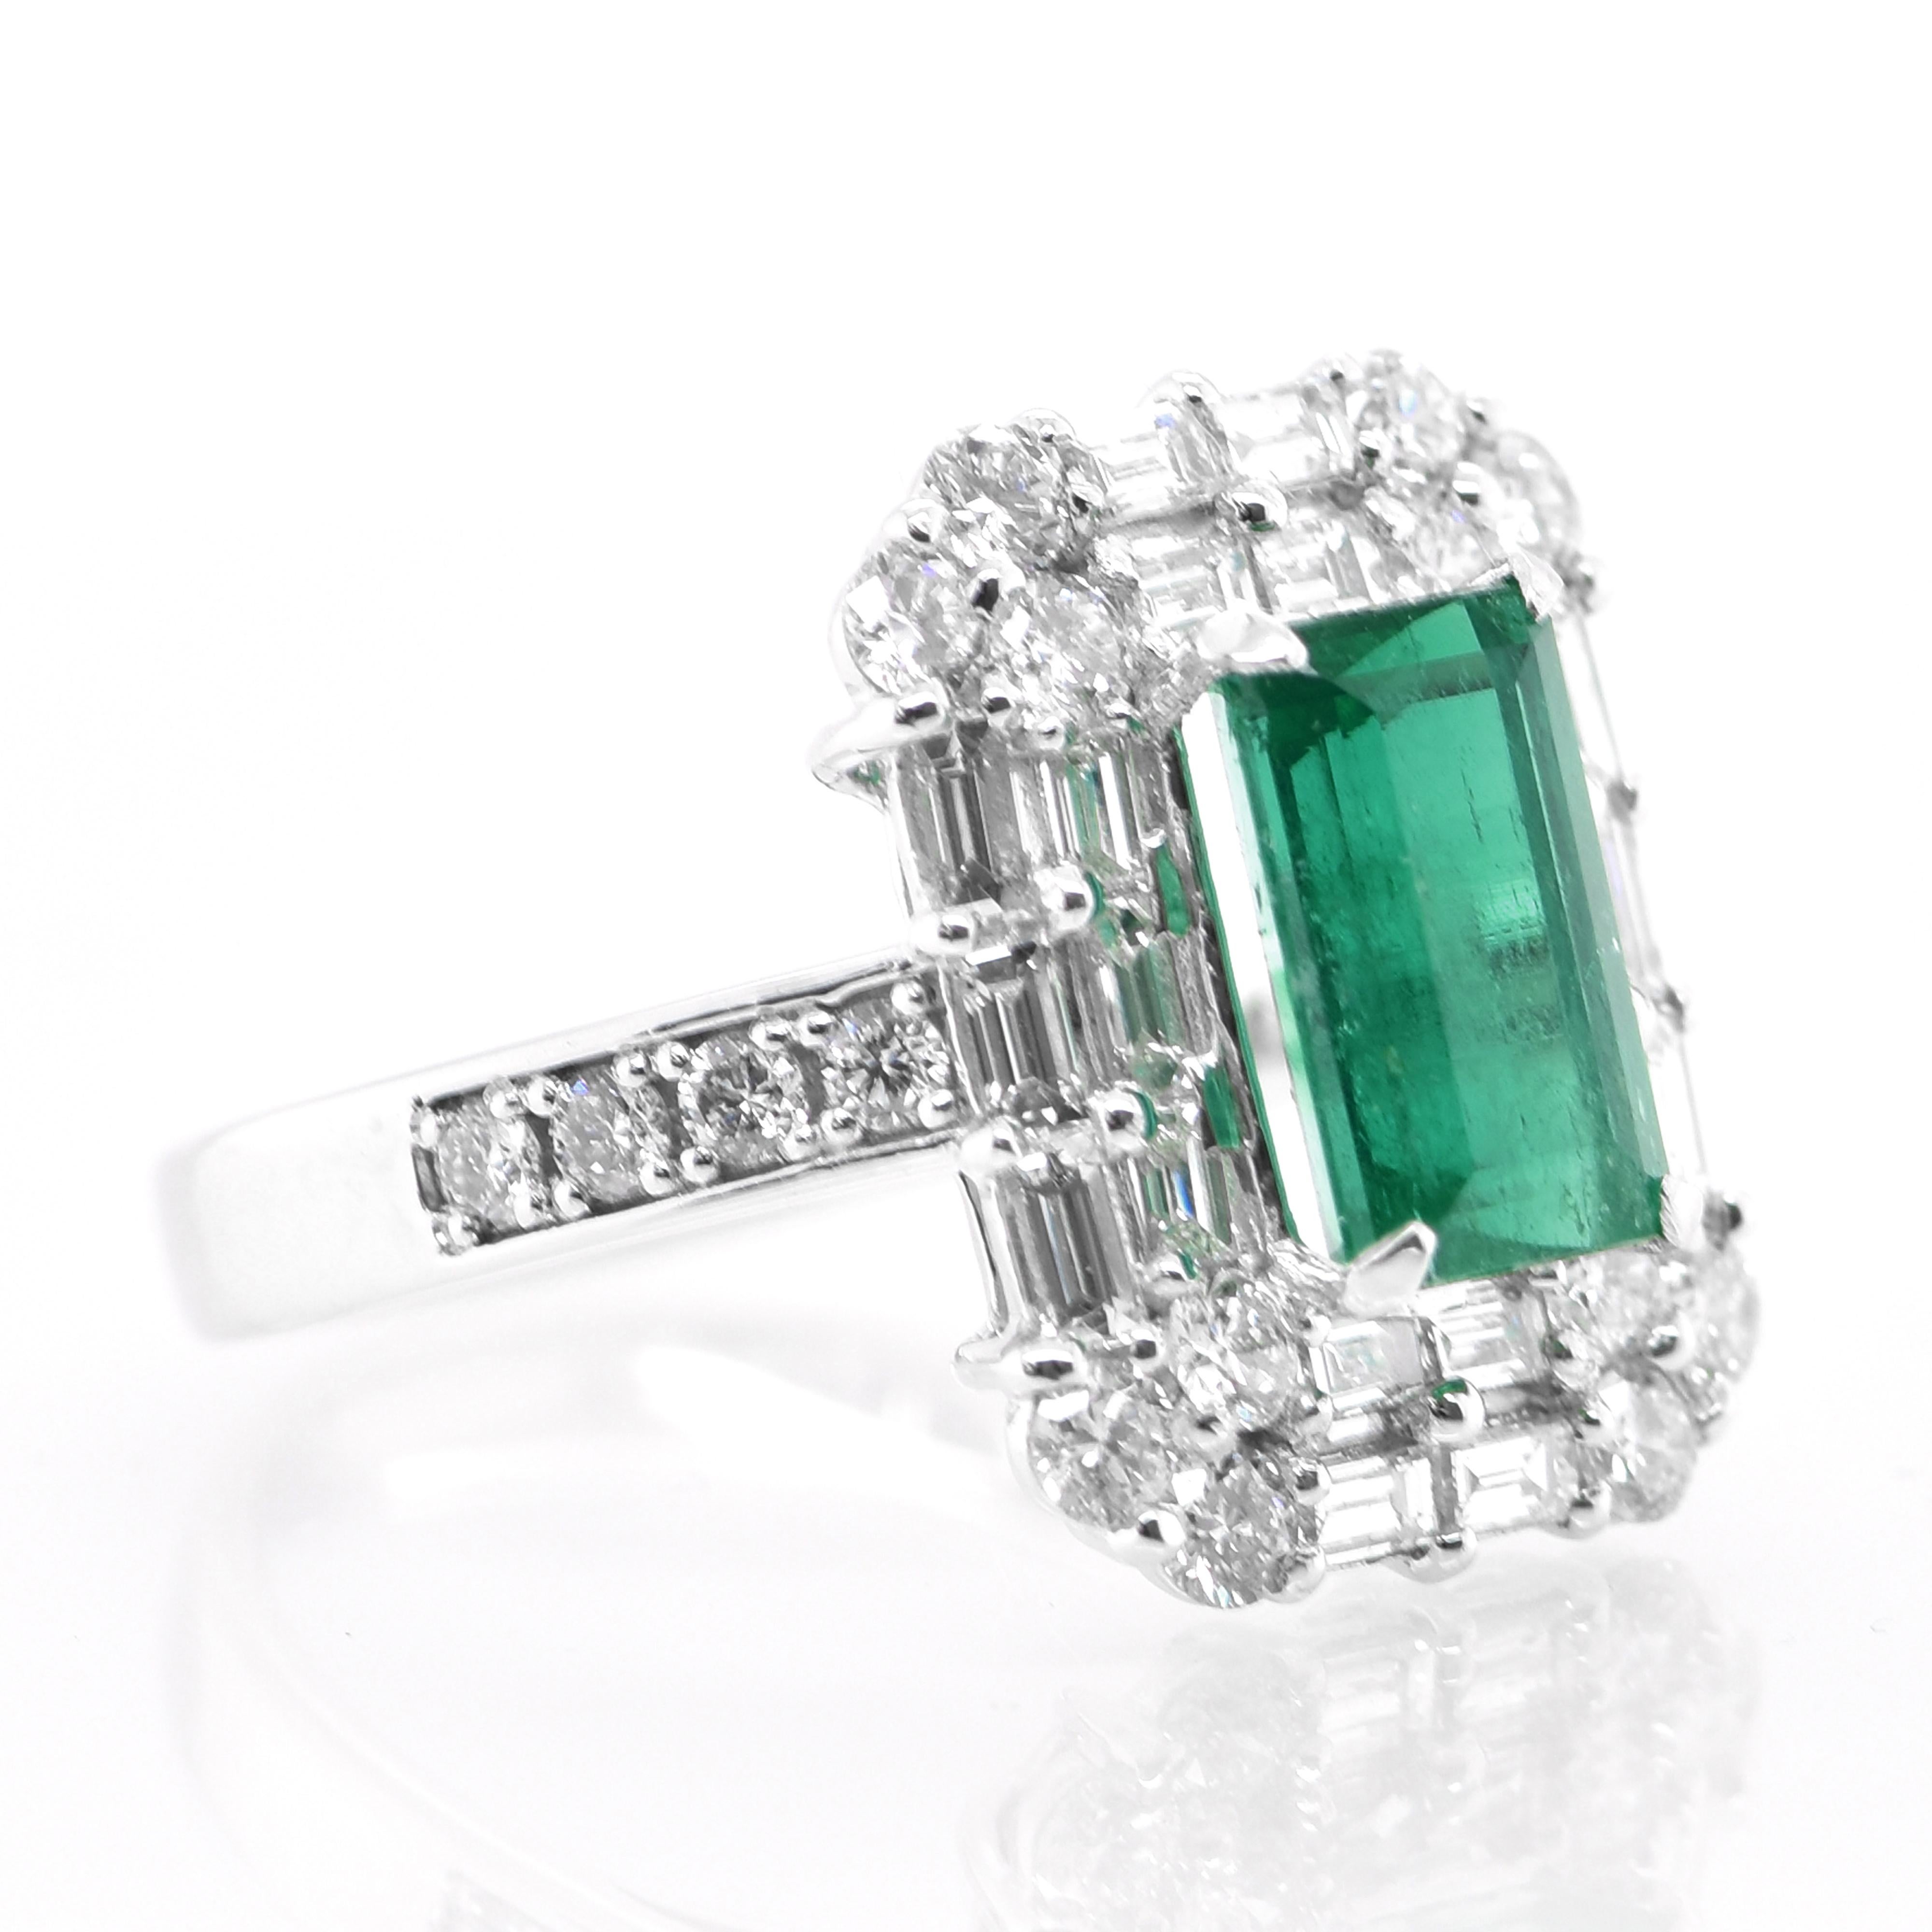 Emerald Cut 1.94 Carat Natural Emerald and Diamond Art Deco Inspired Ring Set in Platinum